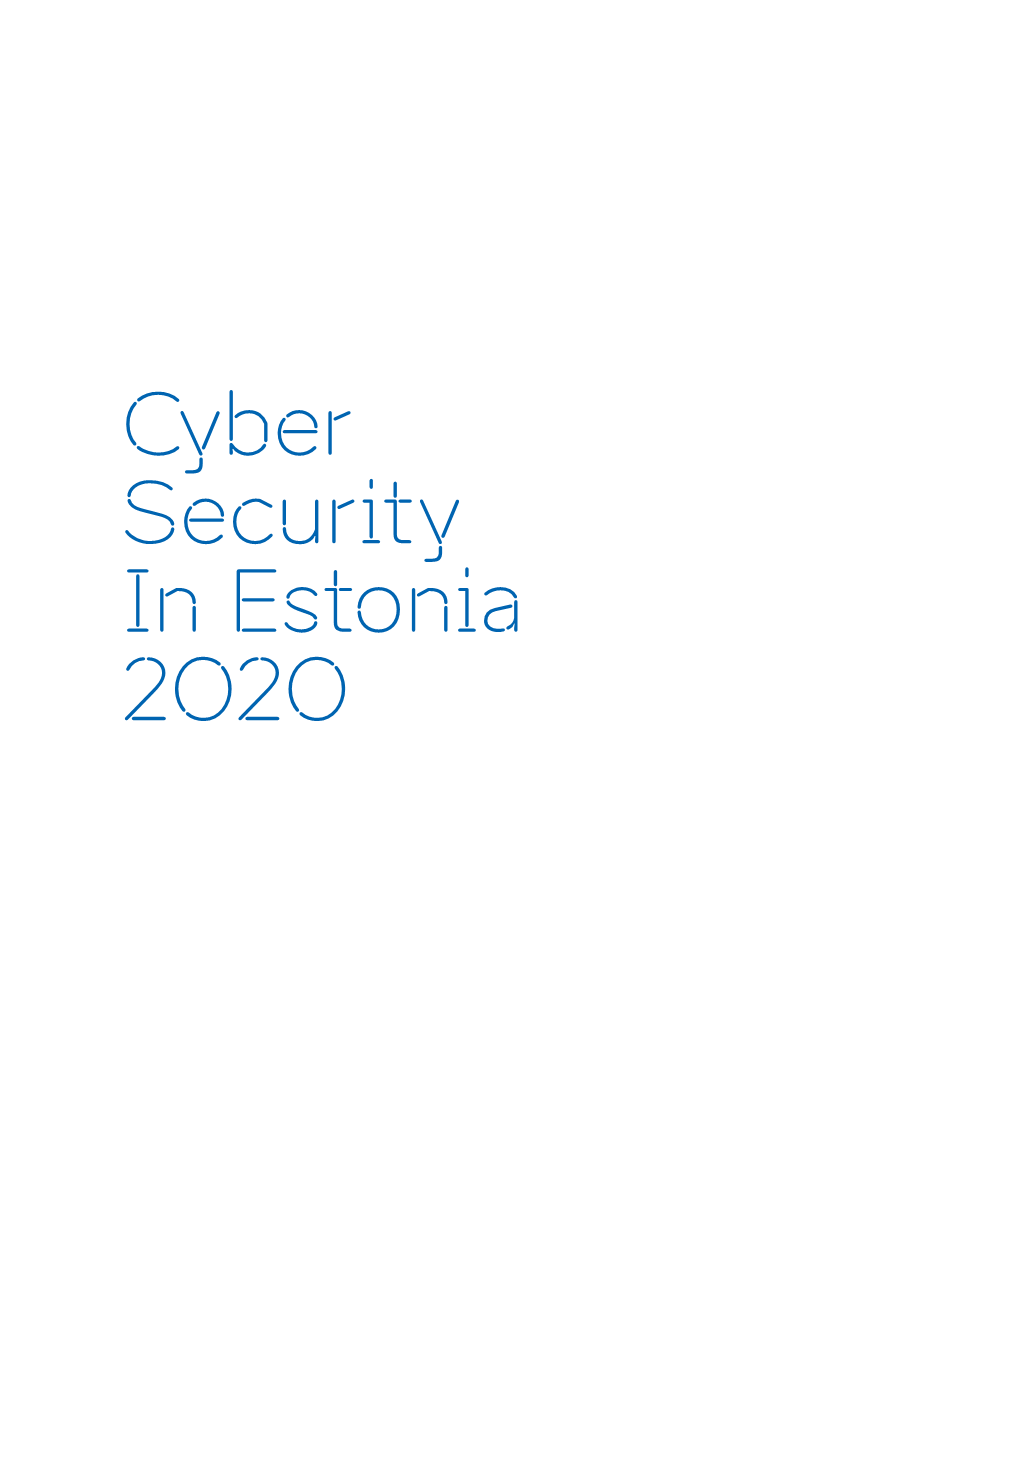 Cyber Security in Estonia 2020 Contents